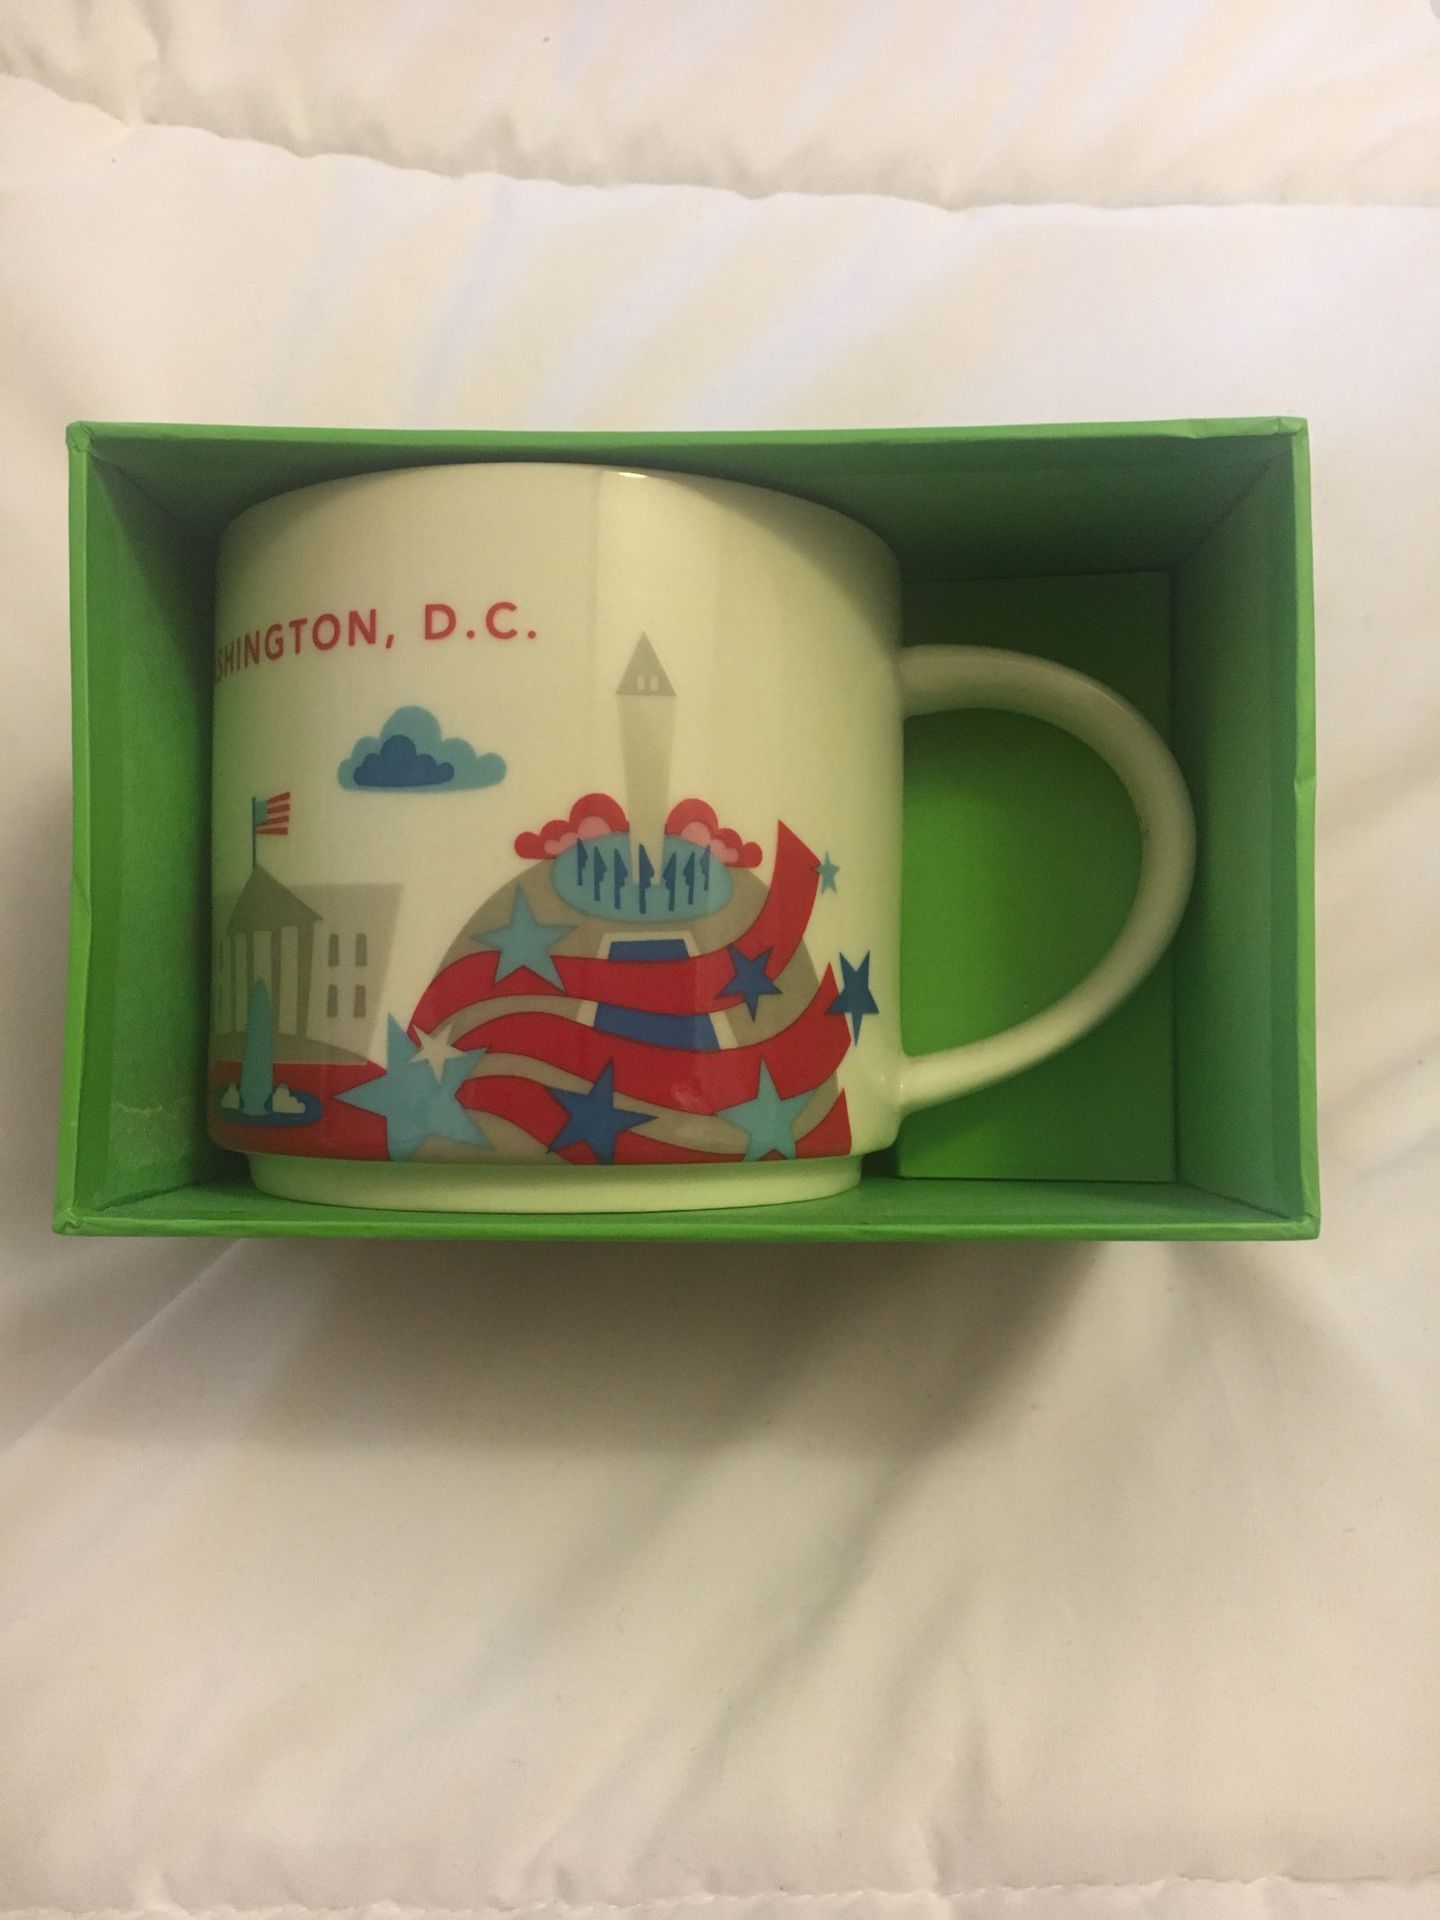 Washington D.C. “You Are Here” Starbucks Mug